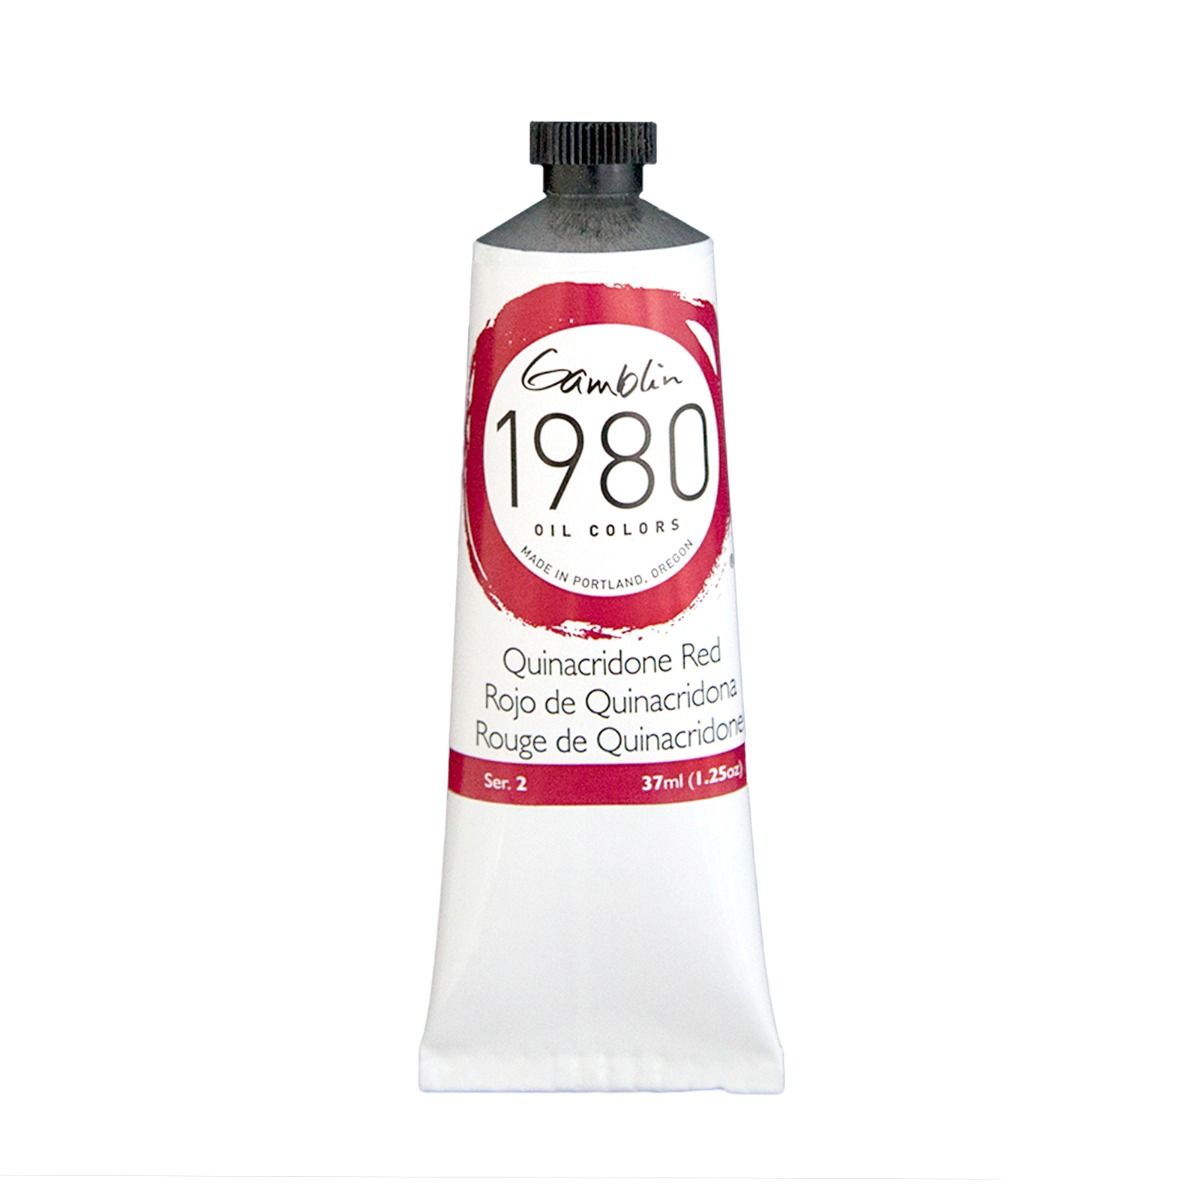 Gamblin 1980 Oils - Quinacridone Red, 37 ml (1.25oz)